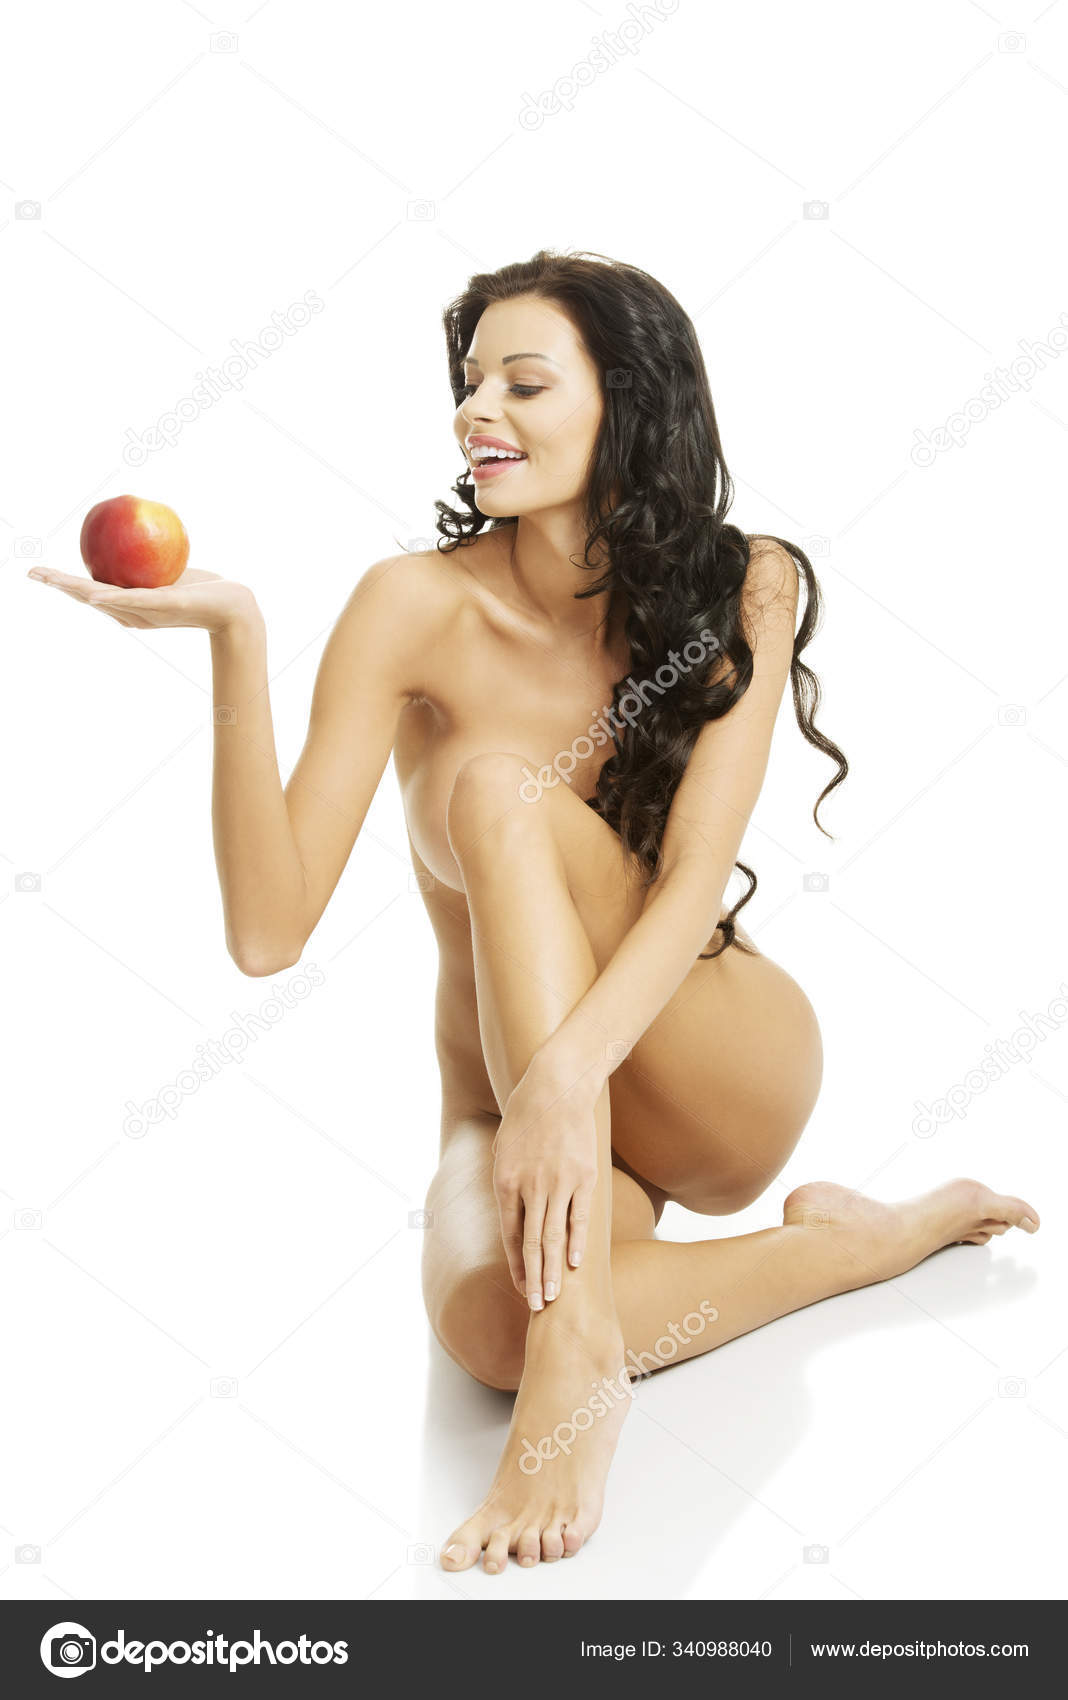 https://st3.depositphotos.com/29384342/34098/i/1600/depositphotos_340988040-stock-photo-happy-fit-nude-woman-apple.jpg